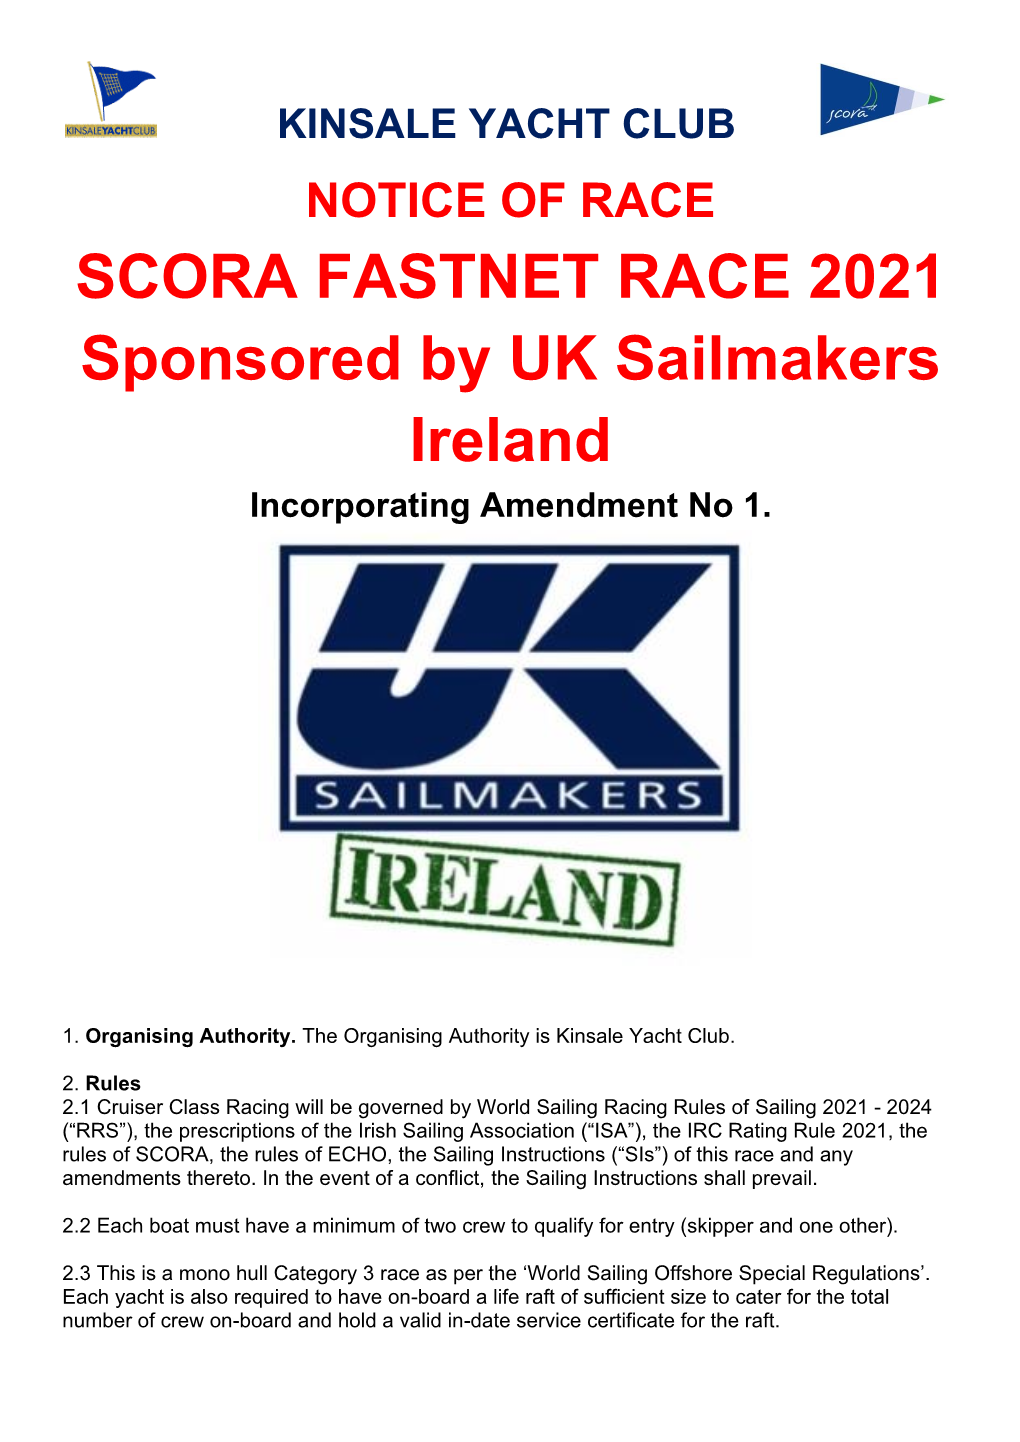 SCORA FASTNET RACE 2021 Sponsored by UK Sailmakers Ireland Incorporating Amendment No 1